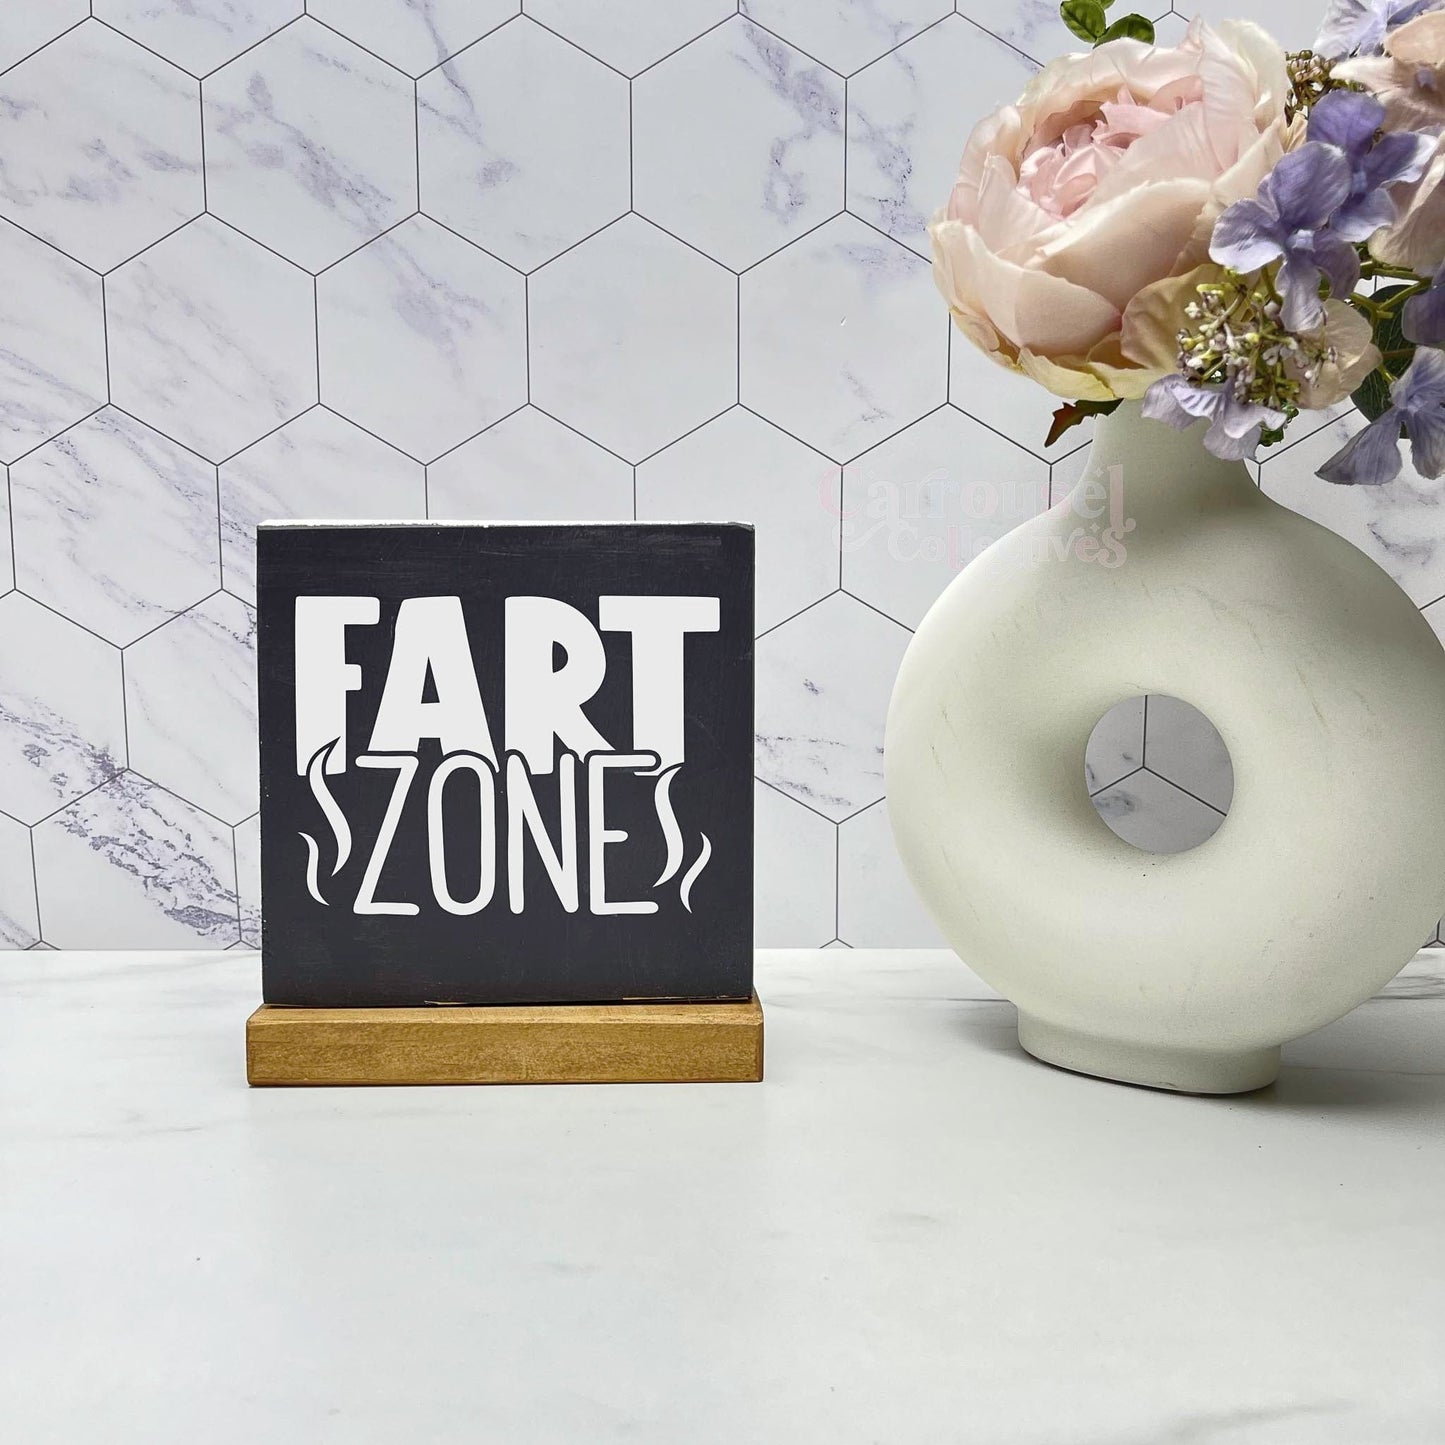 Fart zone wood sign, bathroom wood sign, bathroom decor